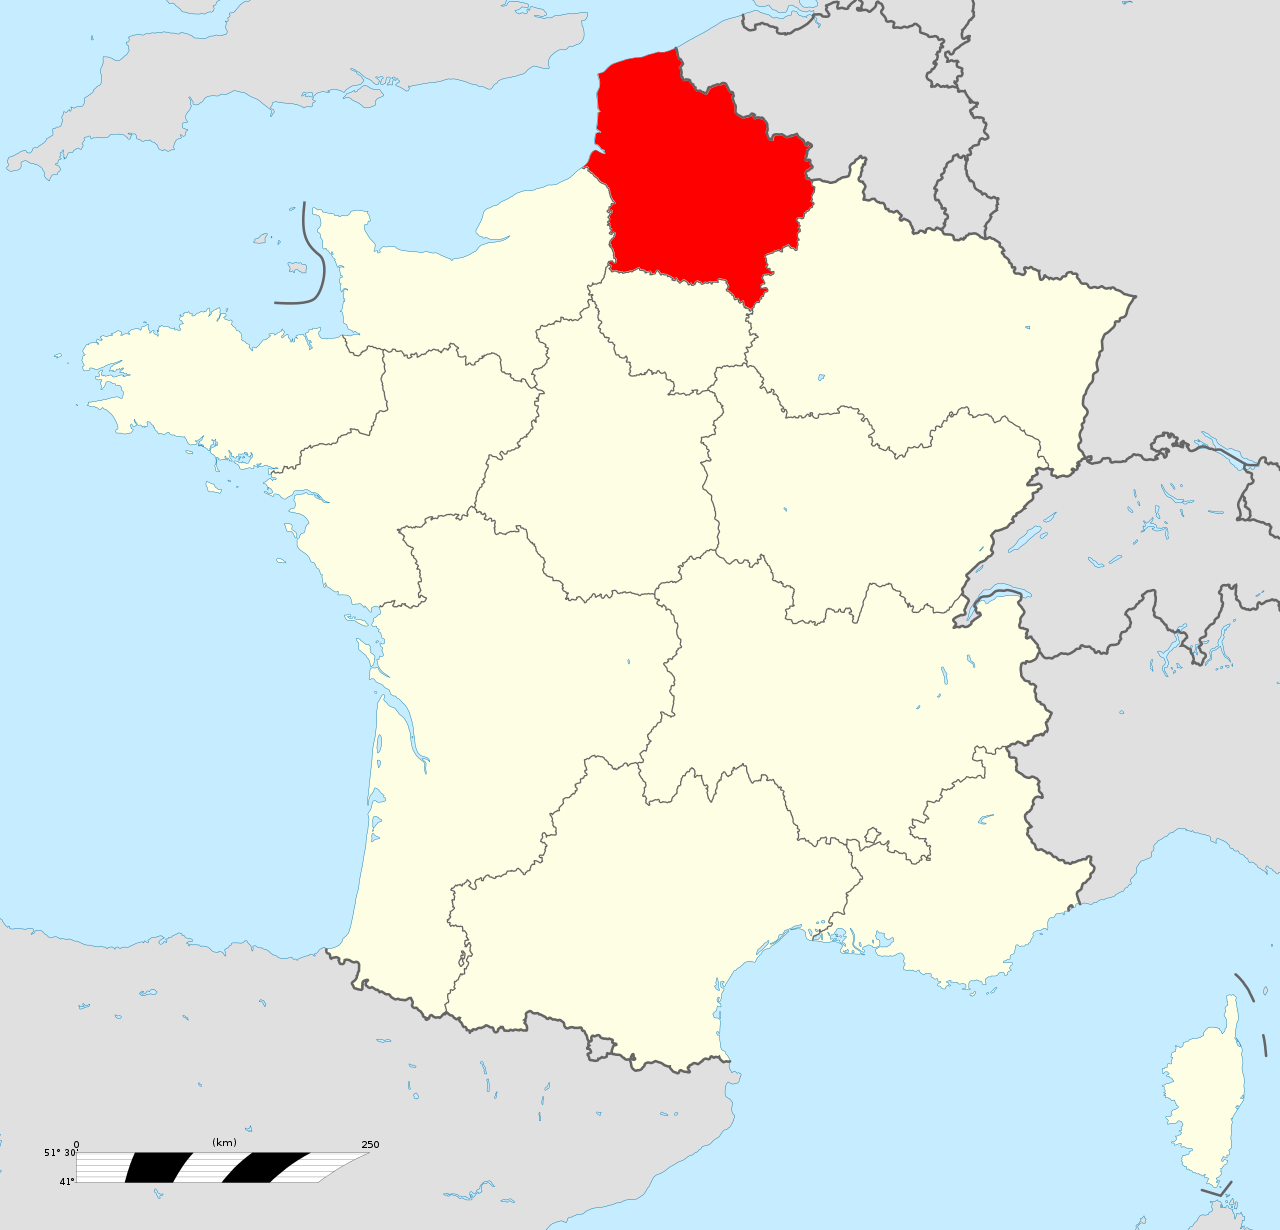 Australia House Urbex location or around the region Hauts-de-France (Somme), France